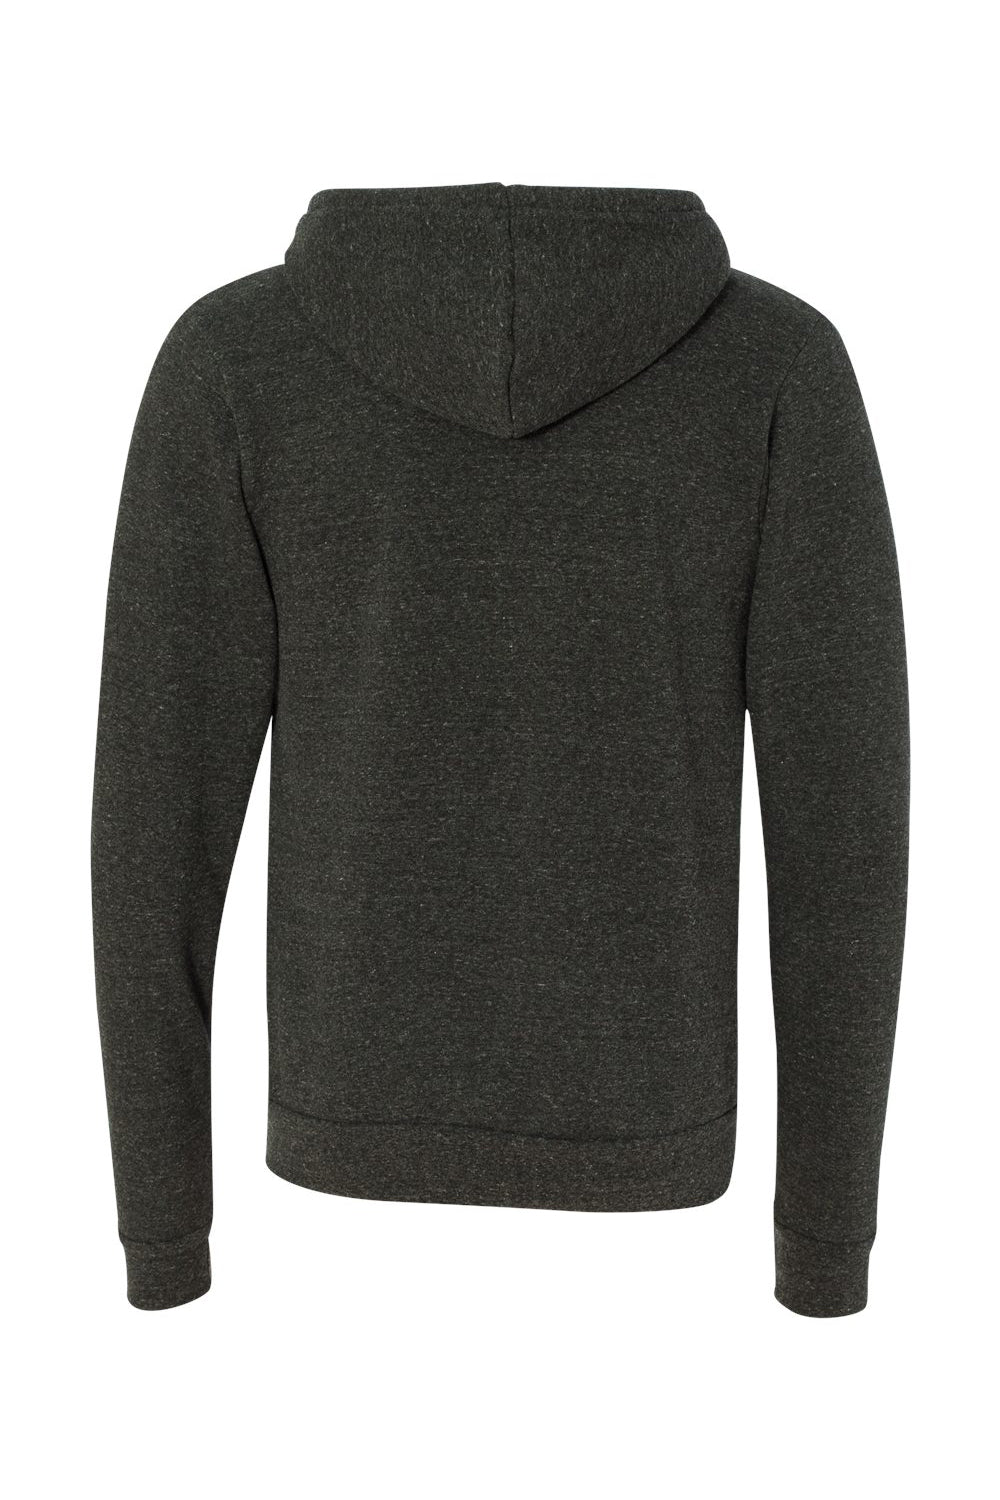 Bella + Canvas BC3909/3909 Mens Sponge Fleece Full Zip Hooded Sweatshirt Hoodie Charcoal Black Flat Back